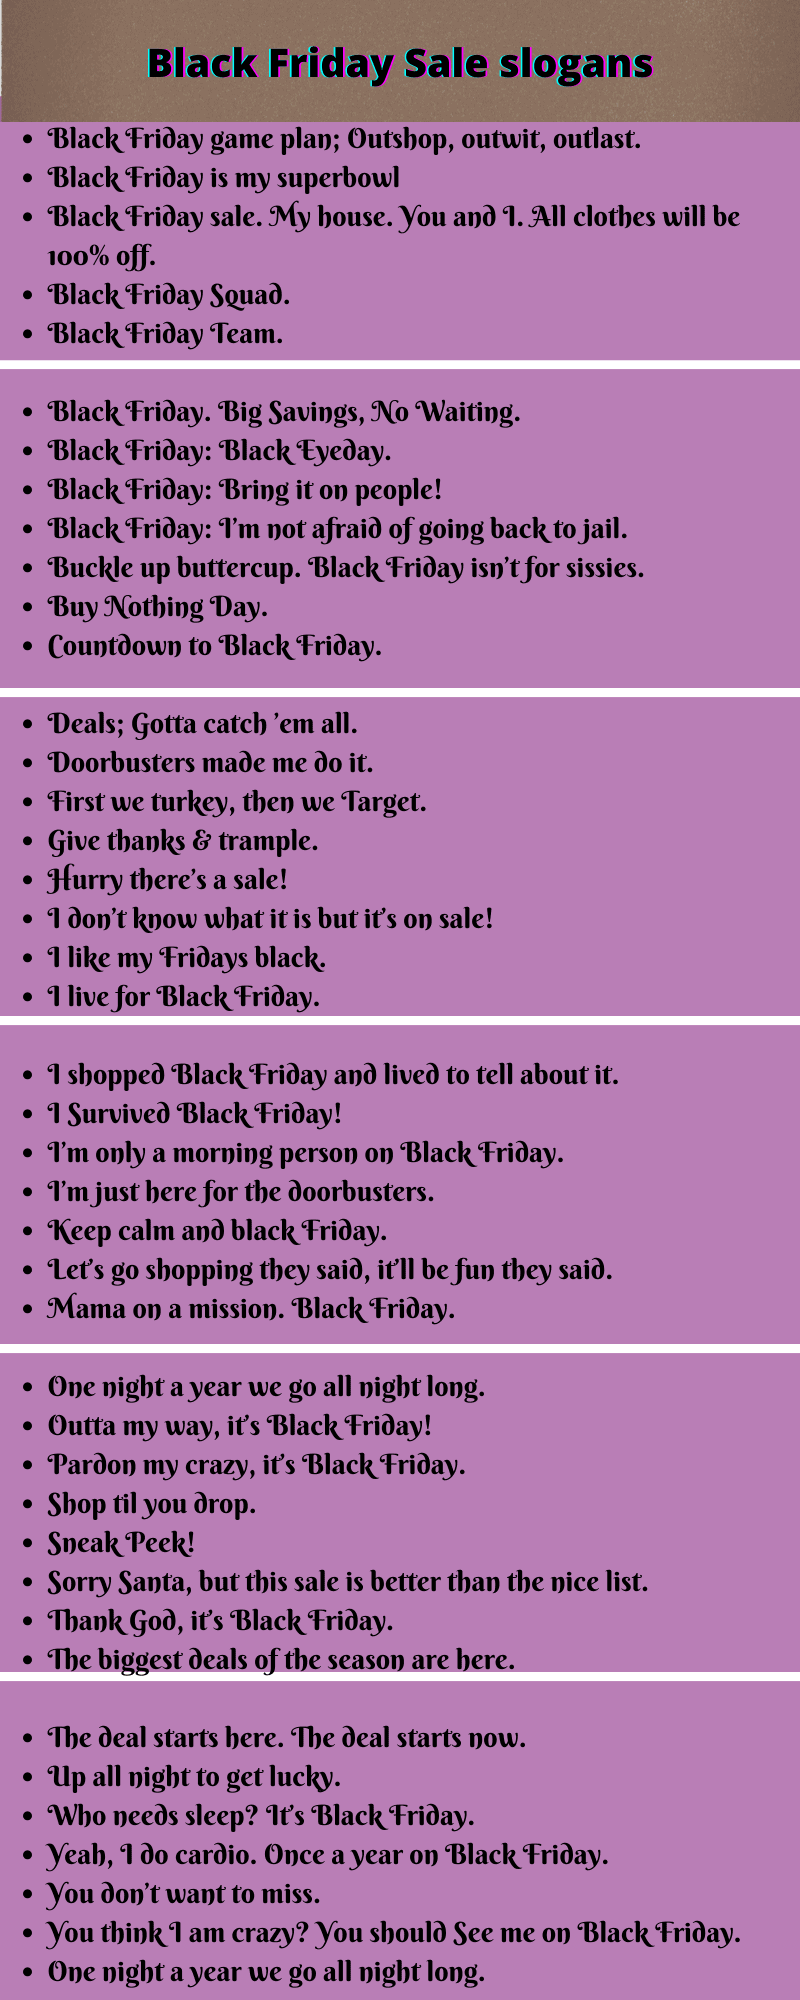 Black Friday Sale Slogans 